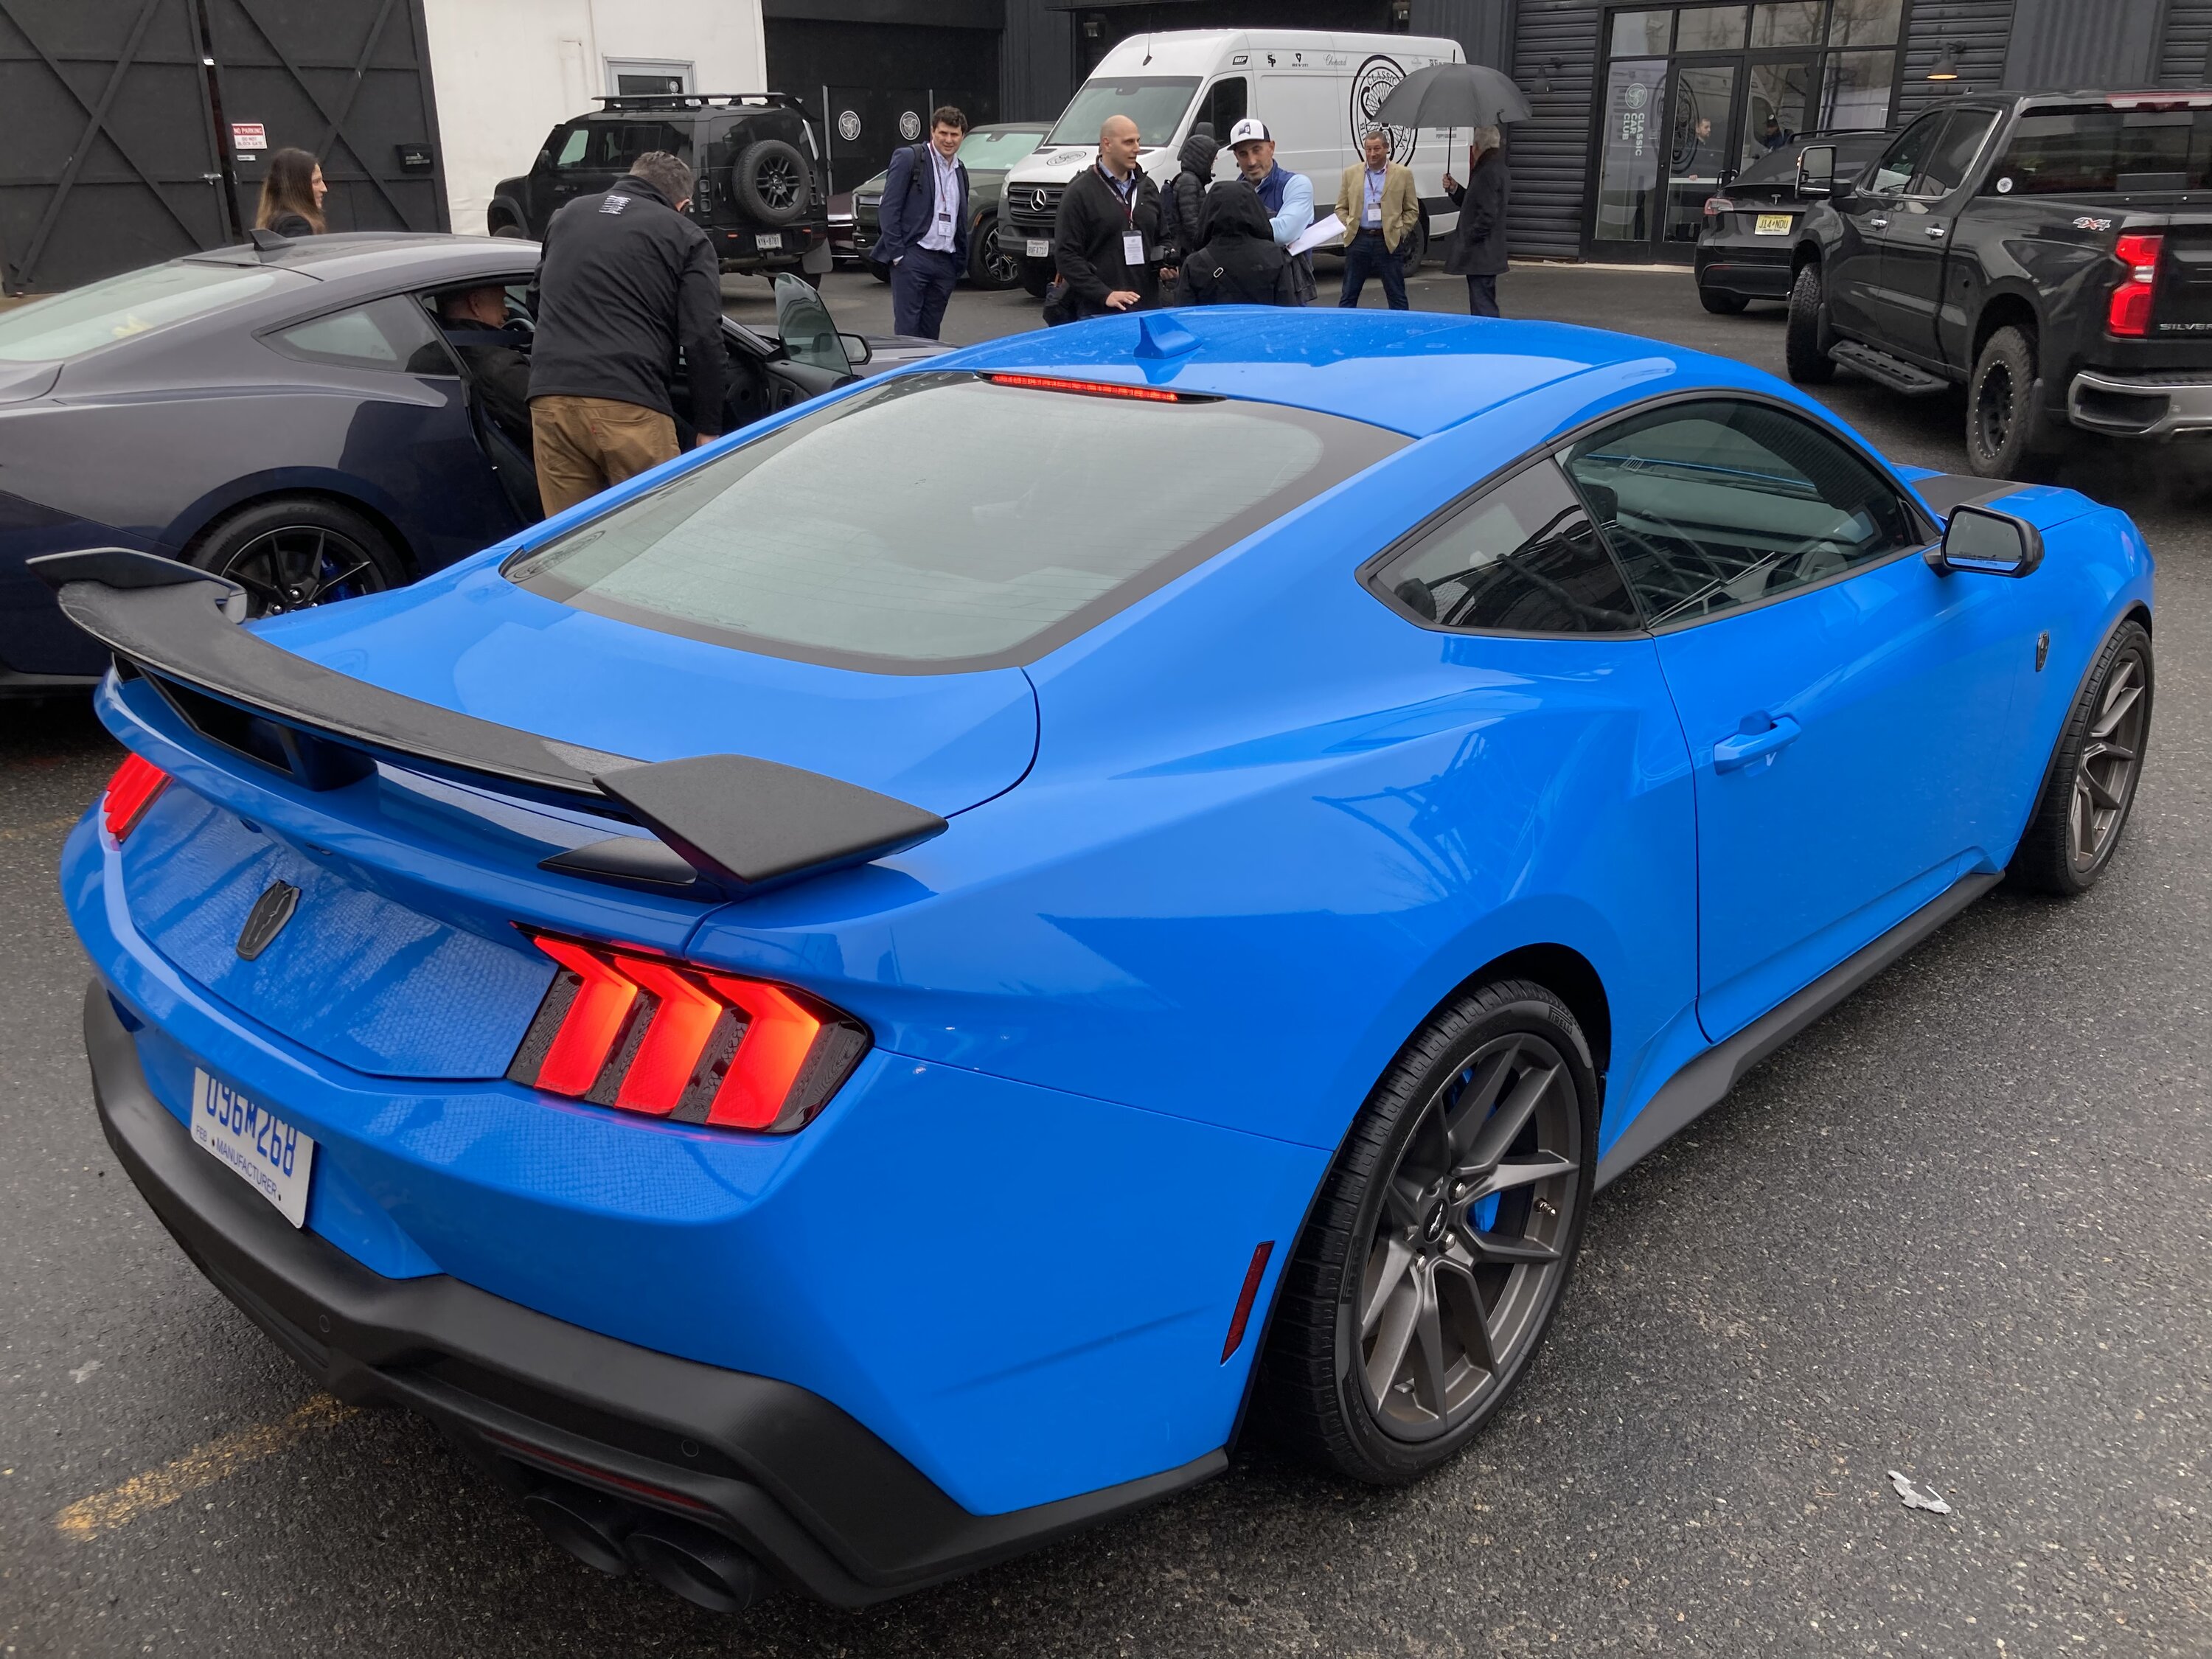 S650 Mustang Video: First Listen of Dark Horse Mustang WOT Driving on Public Roads + Blue Ember / Grabber Blue in Natural Lighting E6435312-D914-4247-96CD-B0F7B9B30985